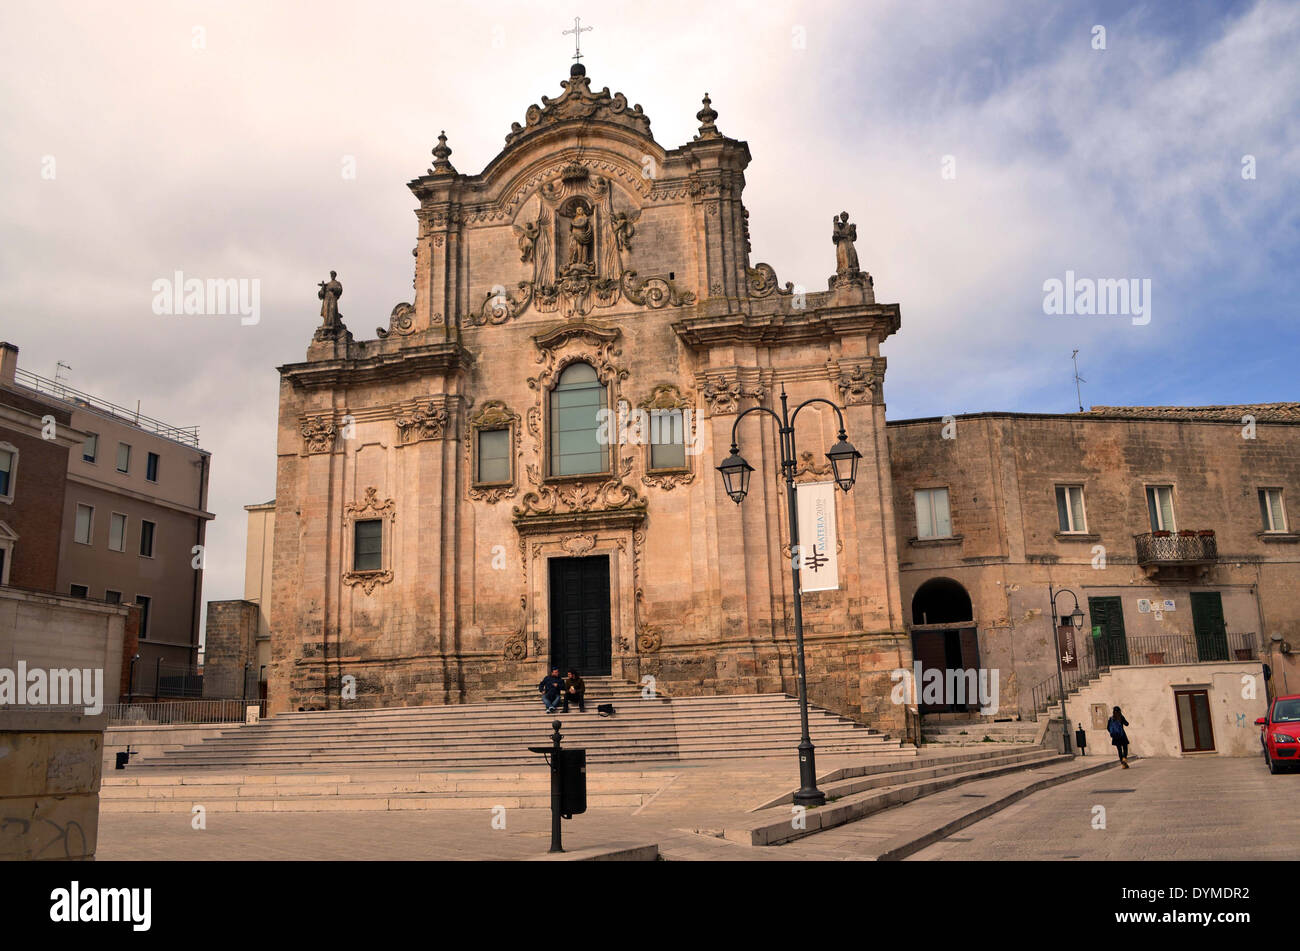 Matera,l'trogladytic città del sud Italia ha oltre 80 chiese, pic. mostra la chiesa di San Francesco di Assisi. Foto Stock